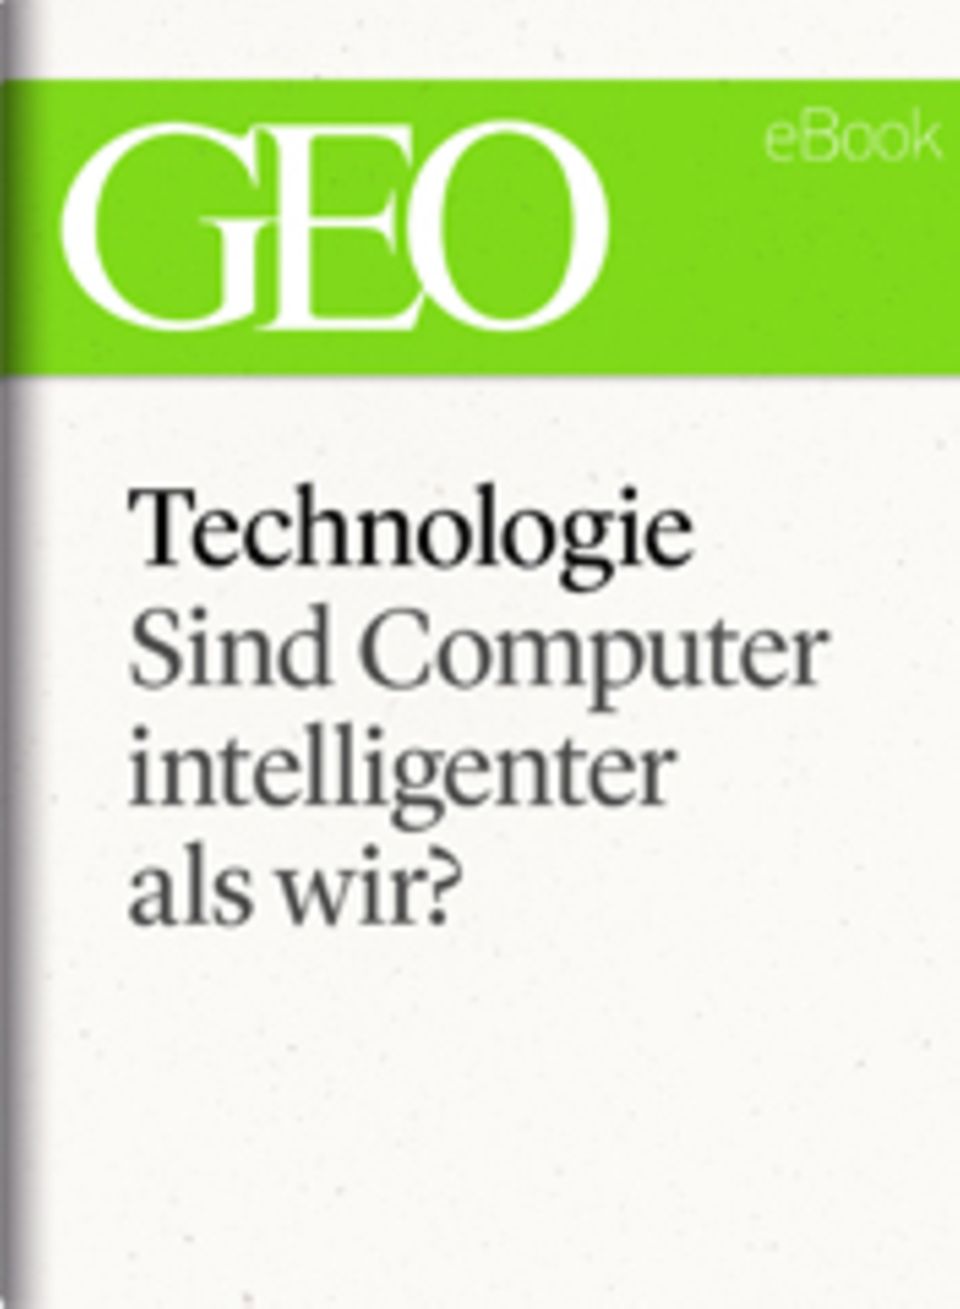 Technologie: GEO eBook "Computer"